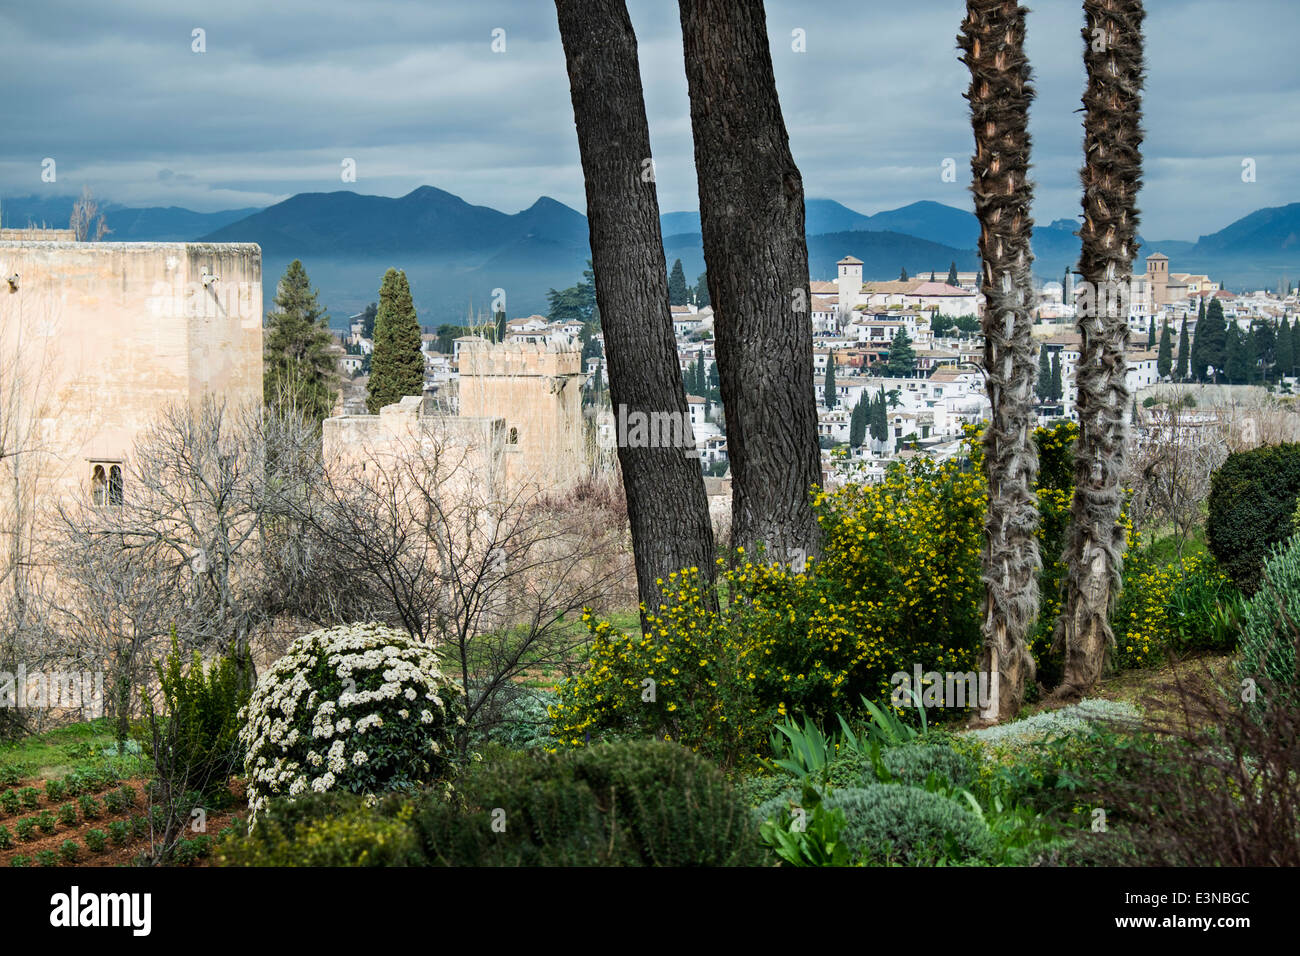 View of cityscape from garden, Alhambra, Granada, Spain Stock Photo